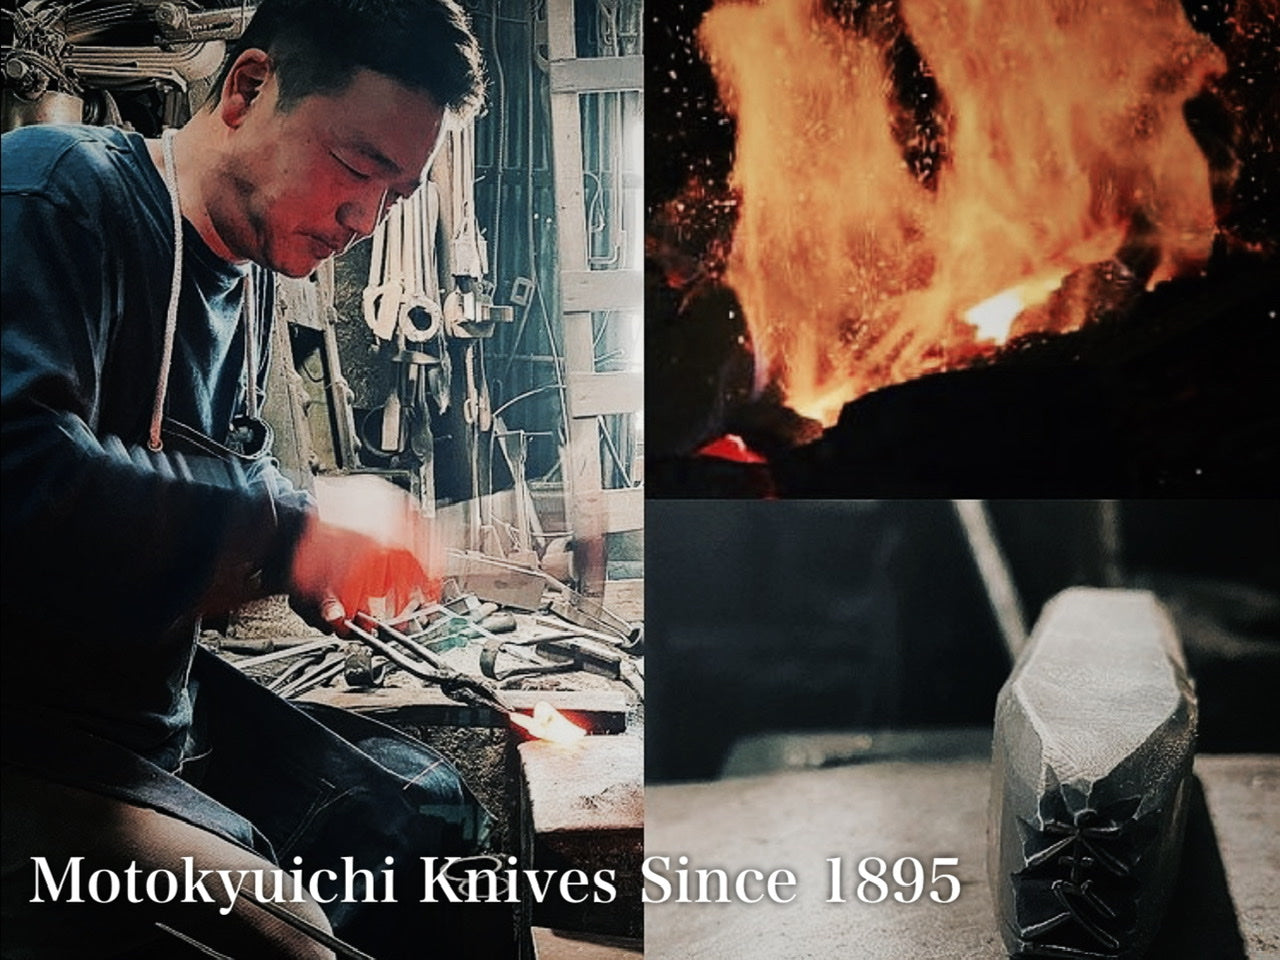 Motokyuich Knife